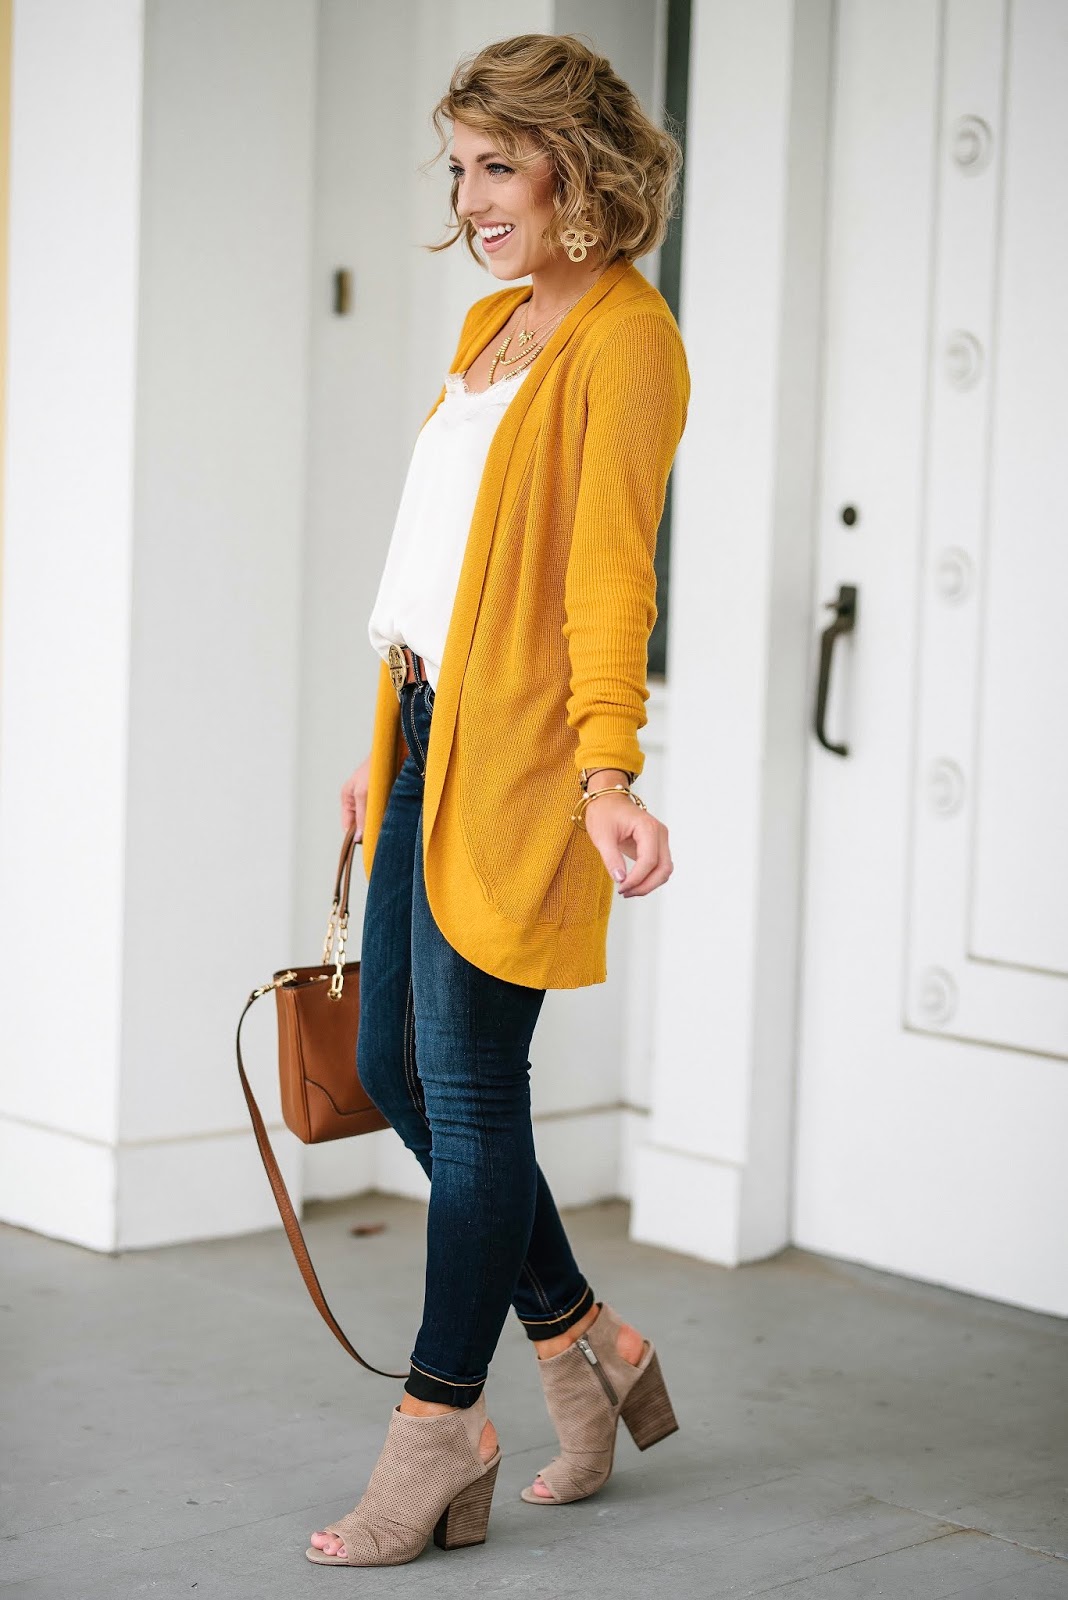 Under $30 Mustard Yellow Cardigan - Target Style! - Something Delightful Blog @racheltimmerman